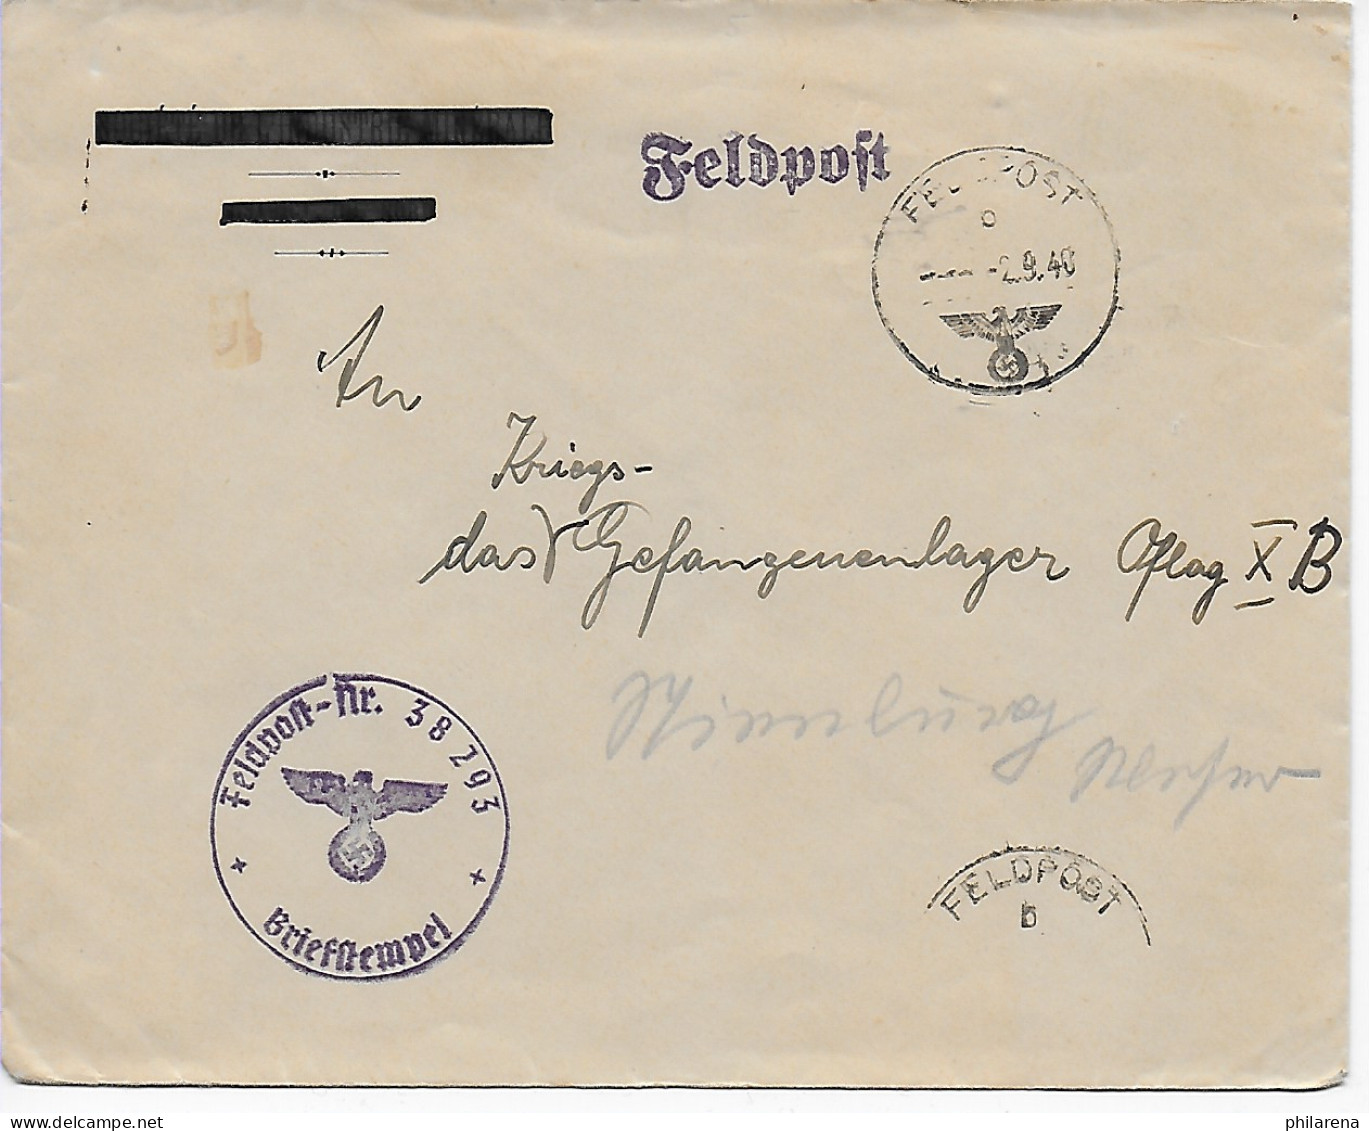 Feldpost Nr. 38293, 1940 An Kriegsgefangenlager Oflag XB, Nienburg - Feldpost 2. Weltkrieg